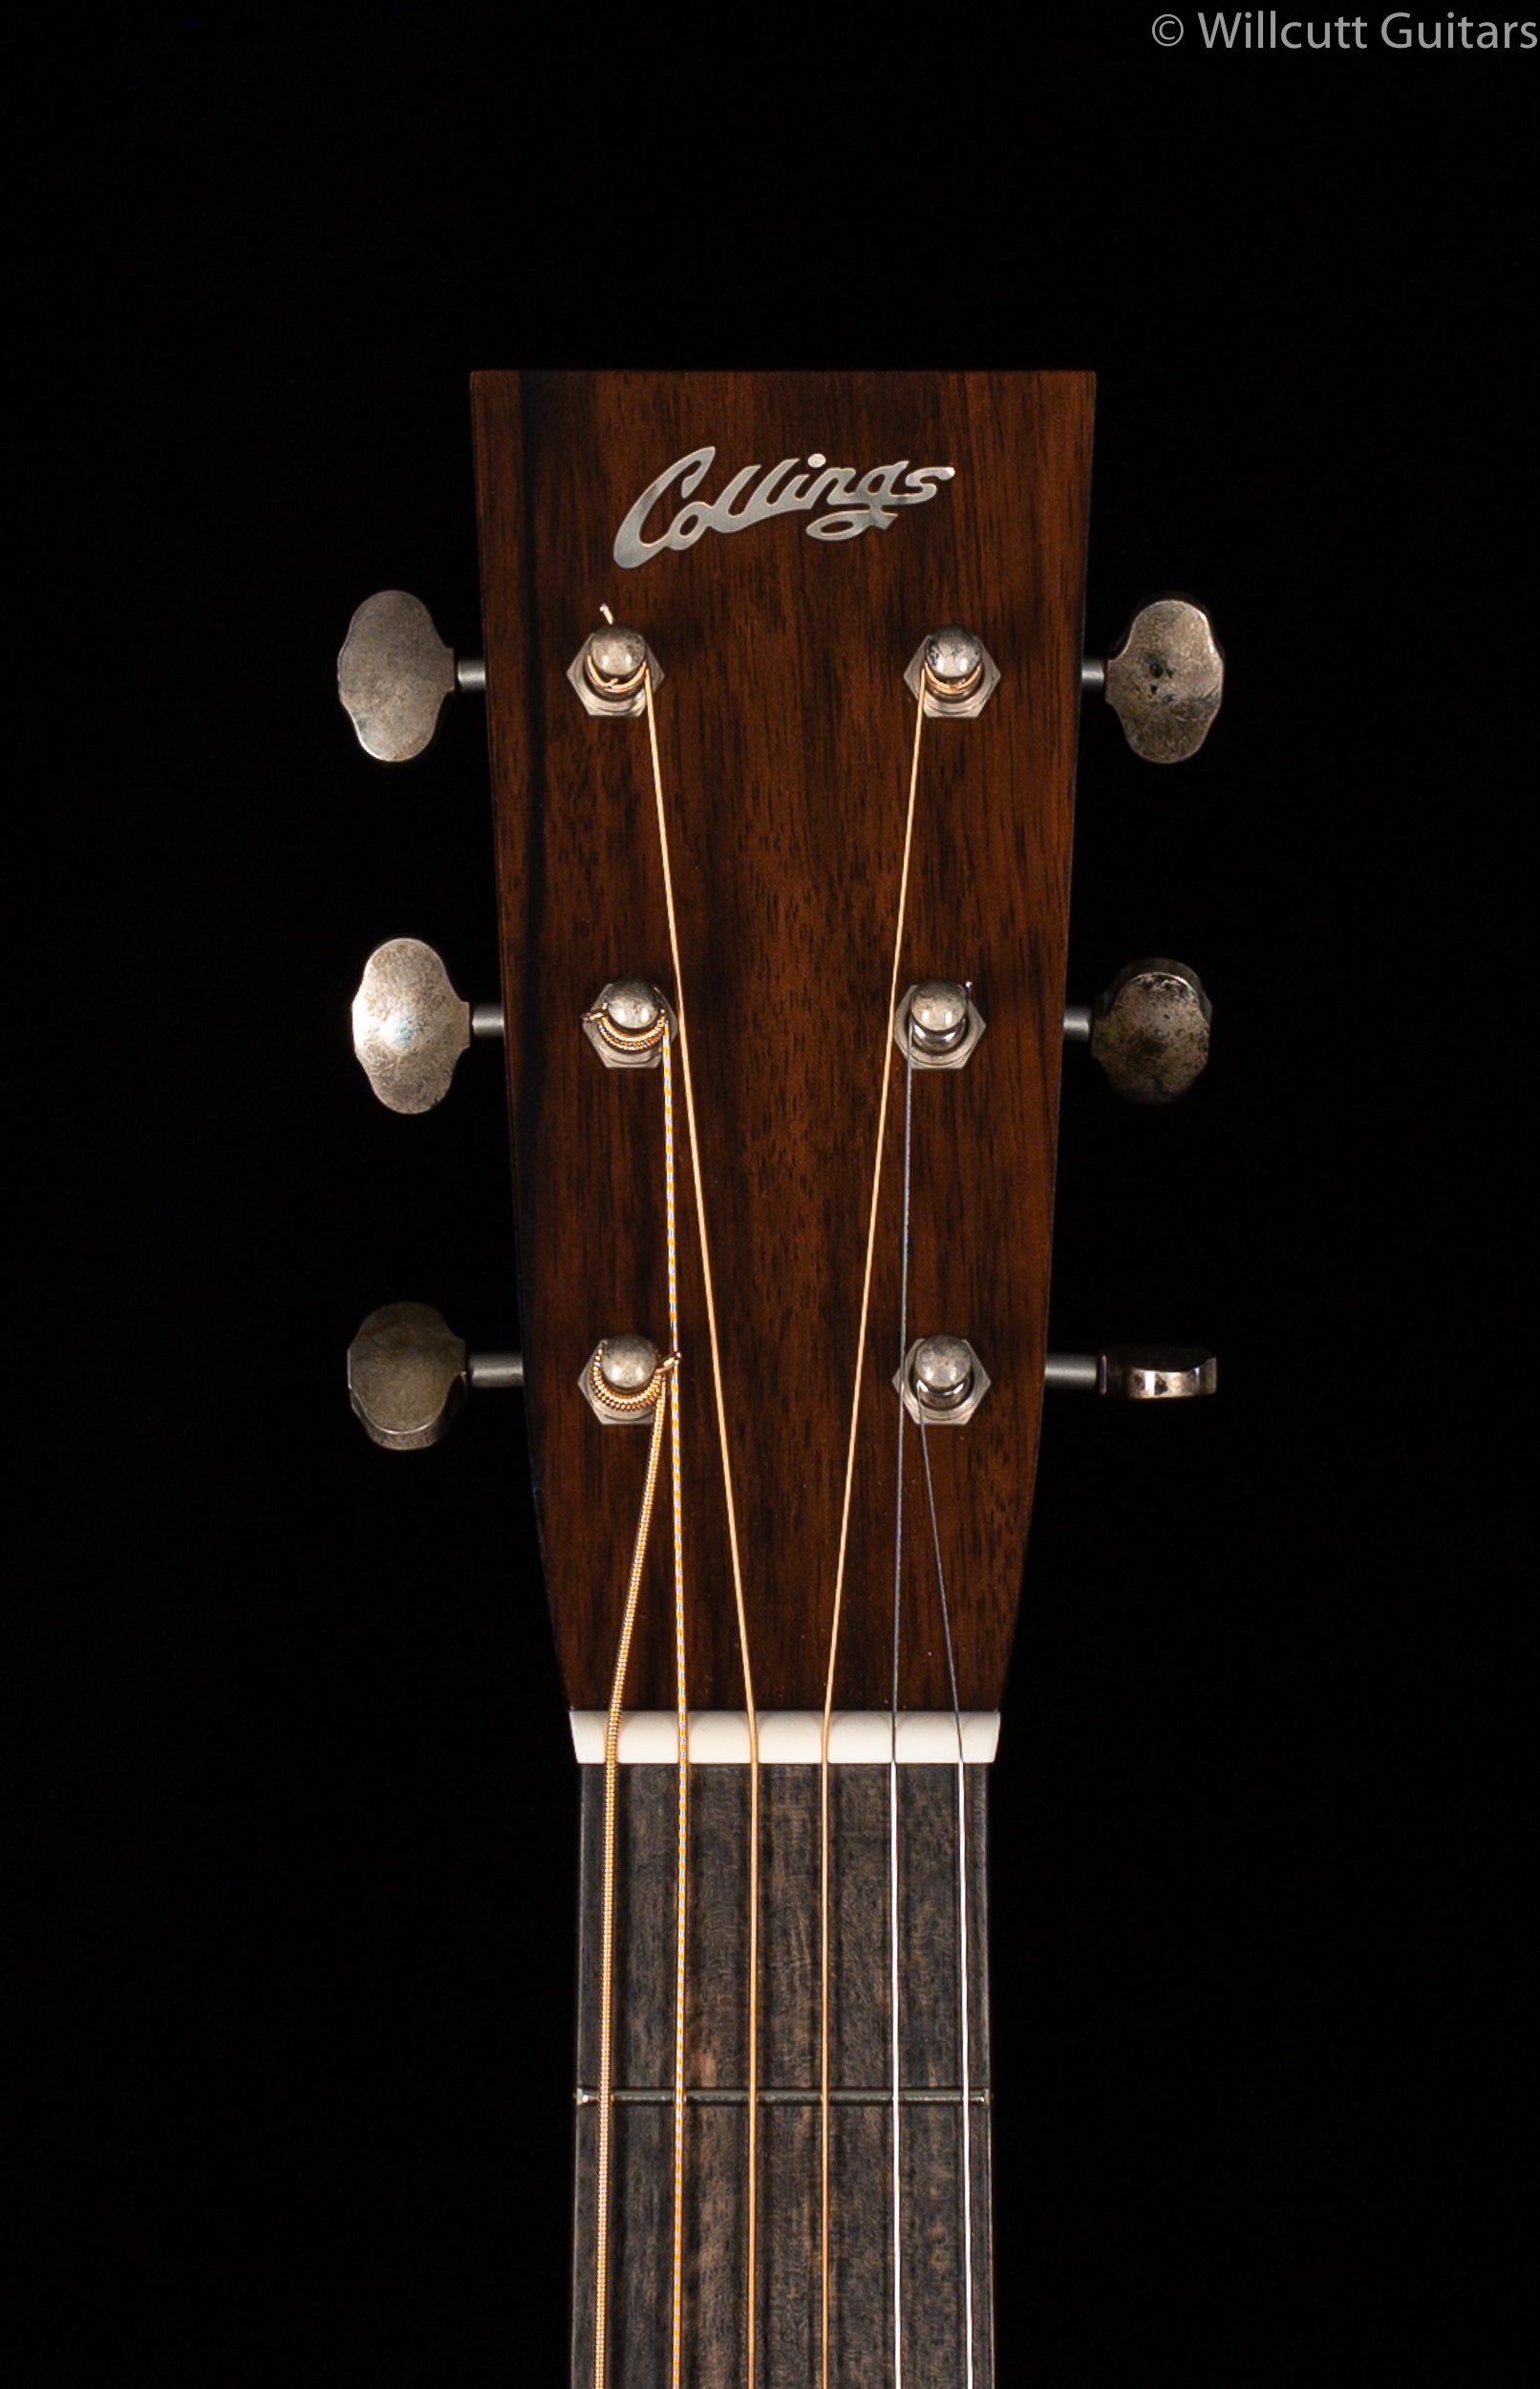 Collings guitars serial numbers